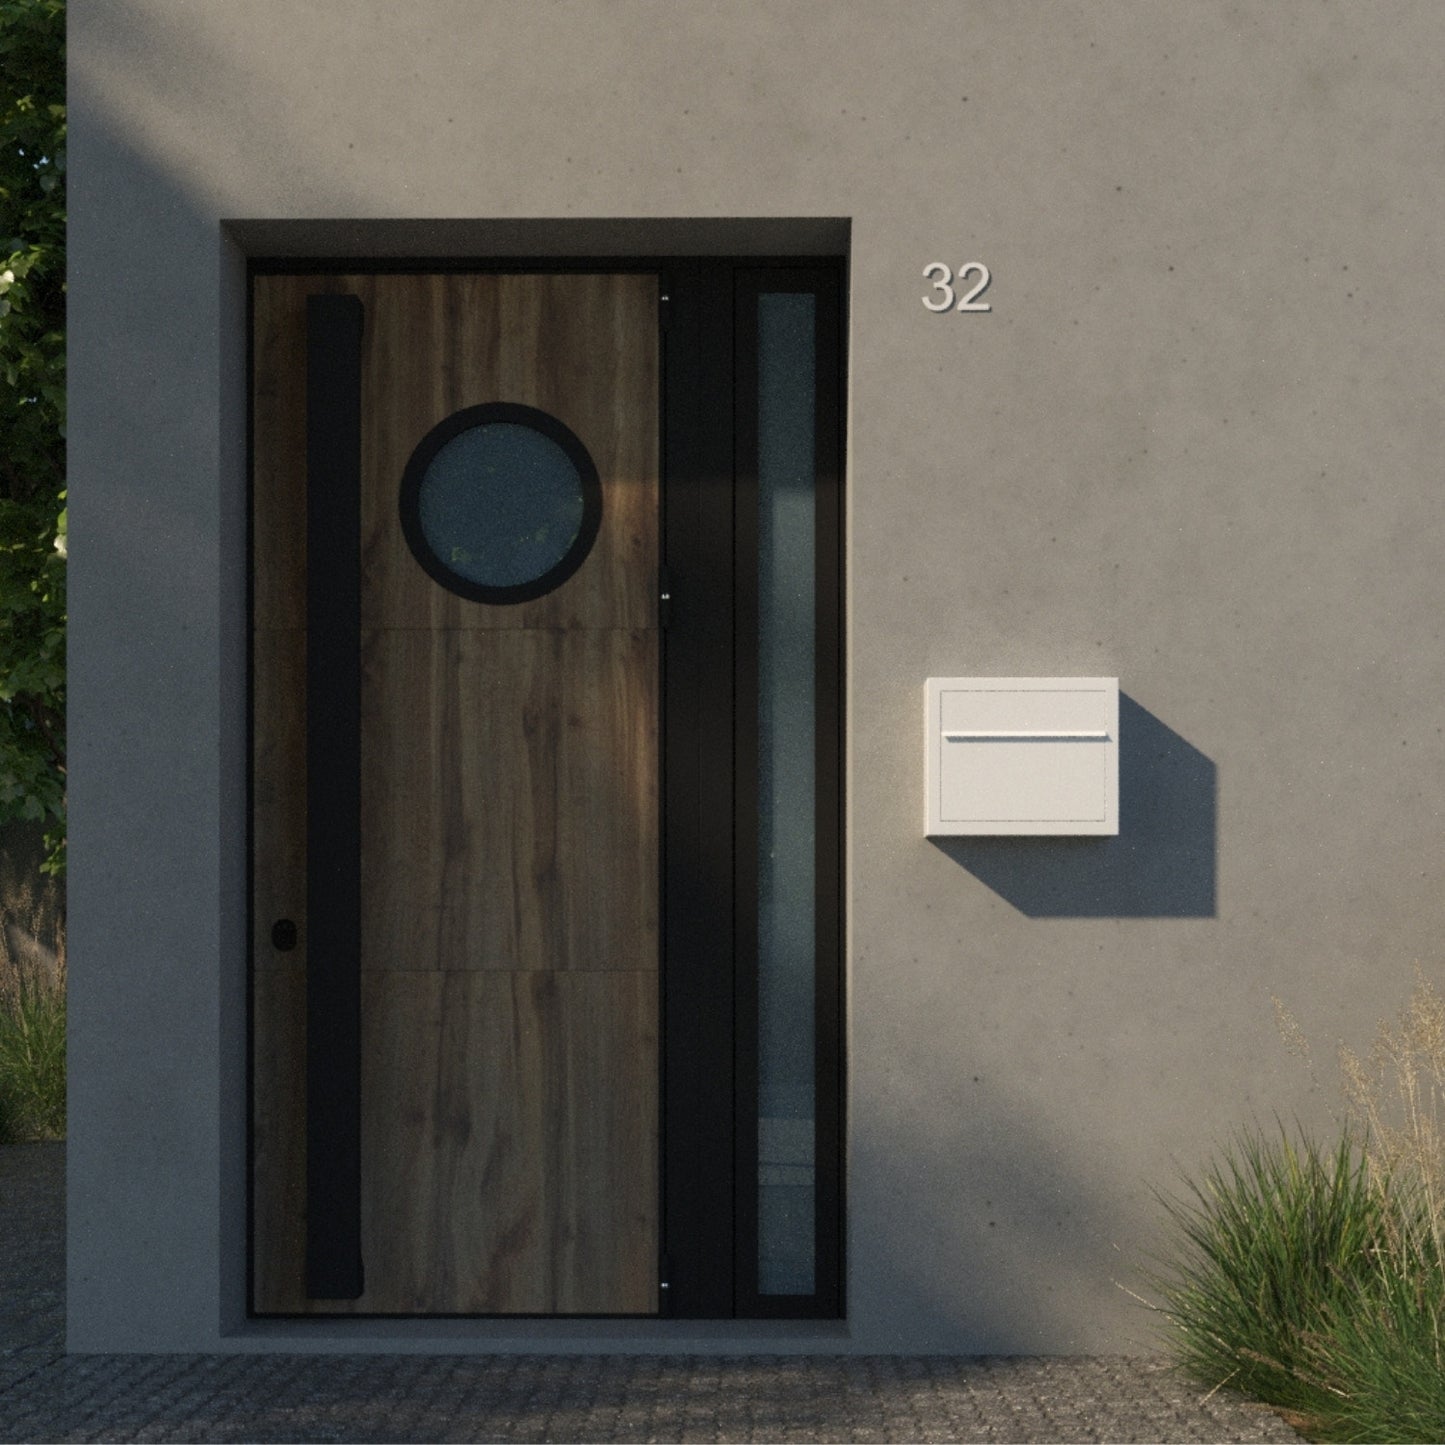 ELEGANCE by Bravios - Modern wall-mounted white mailbox